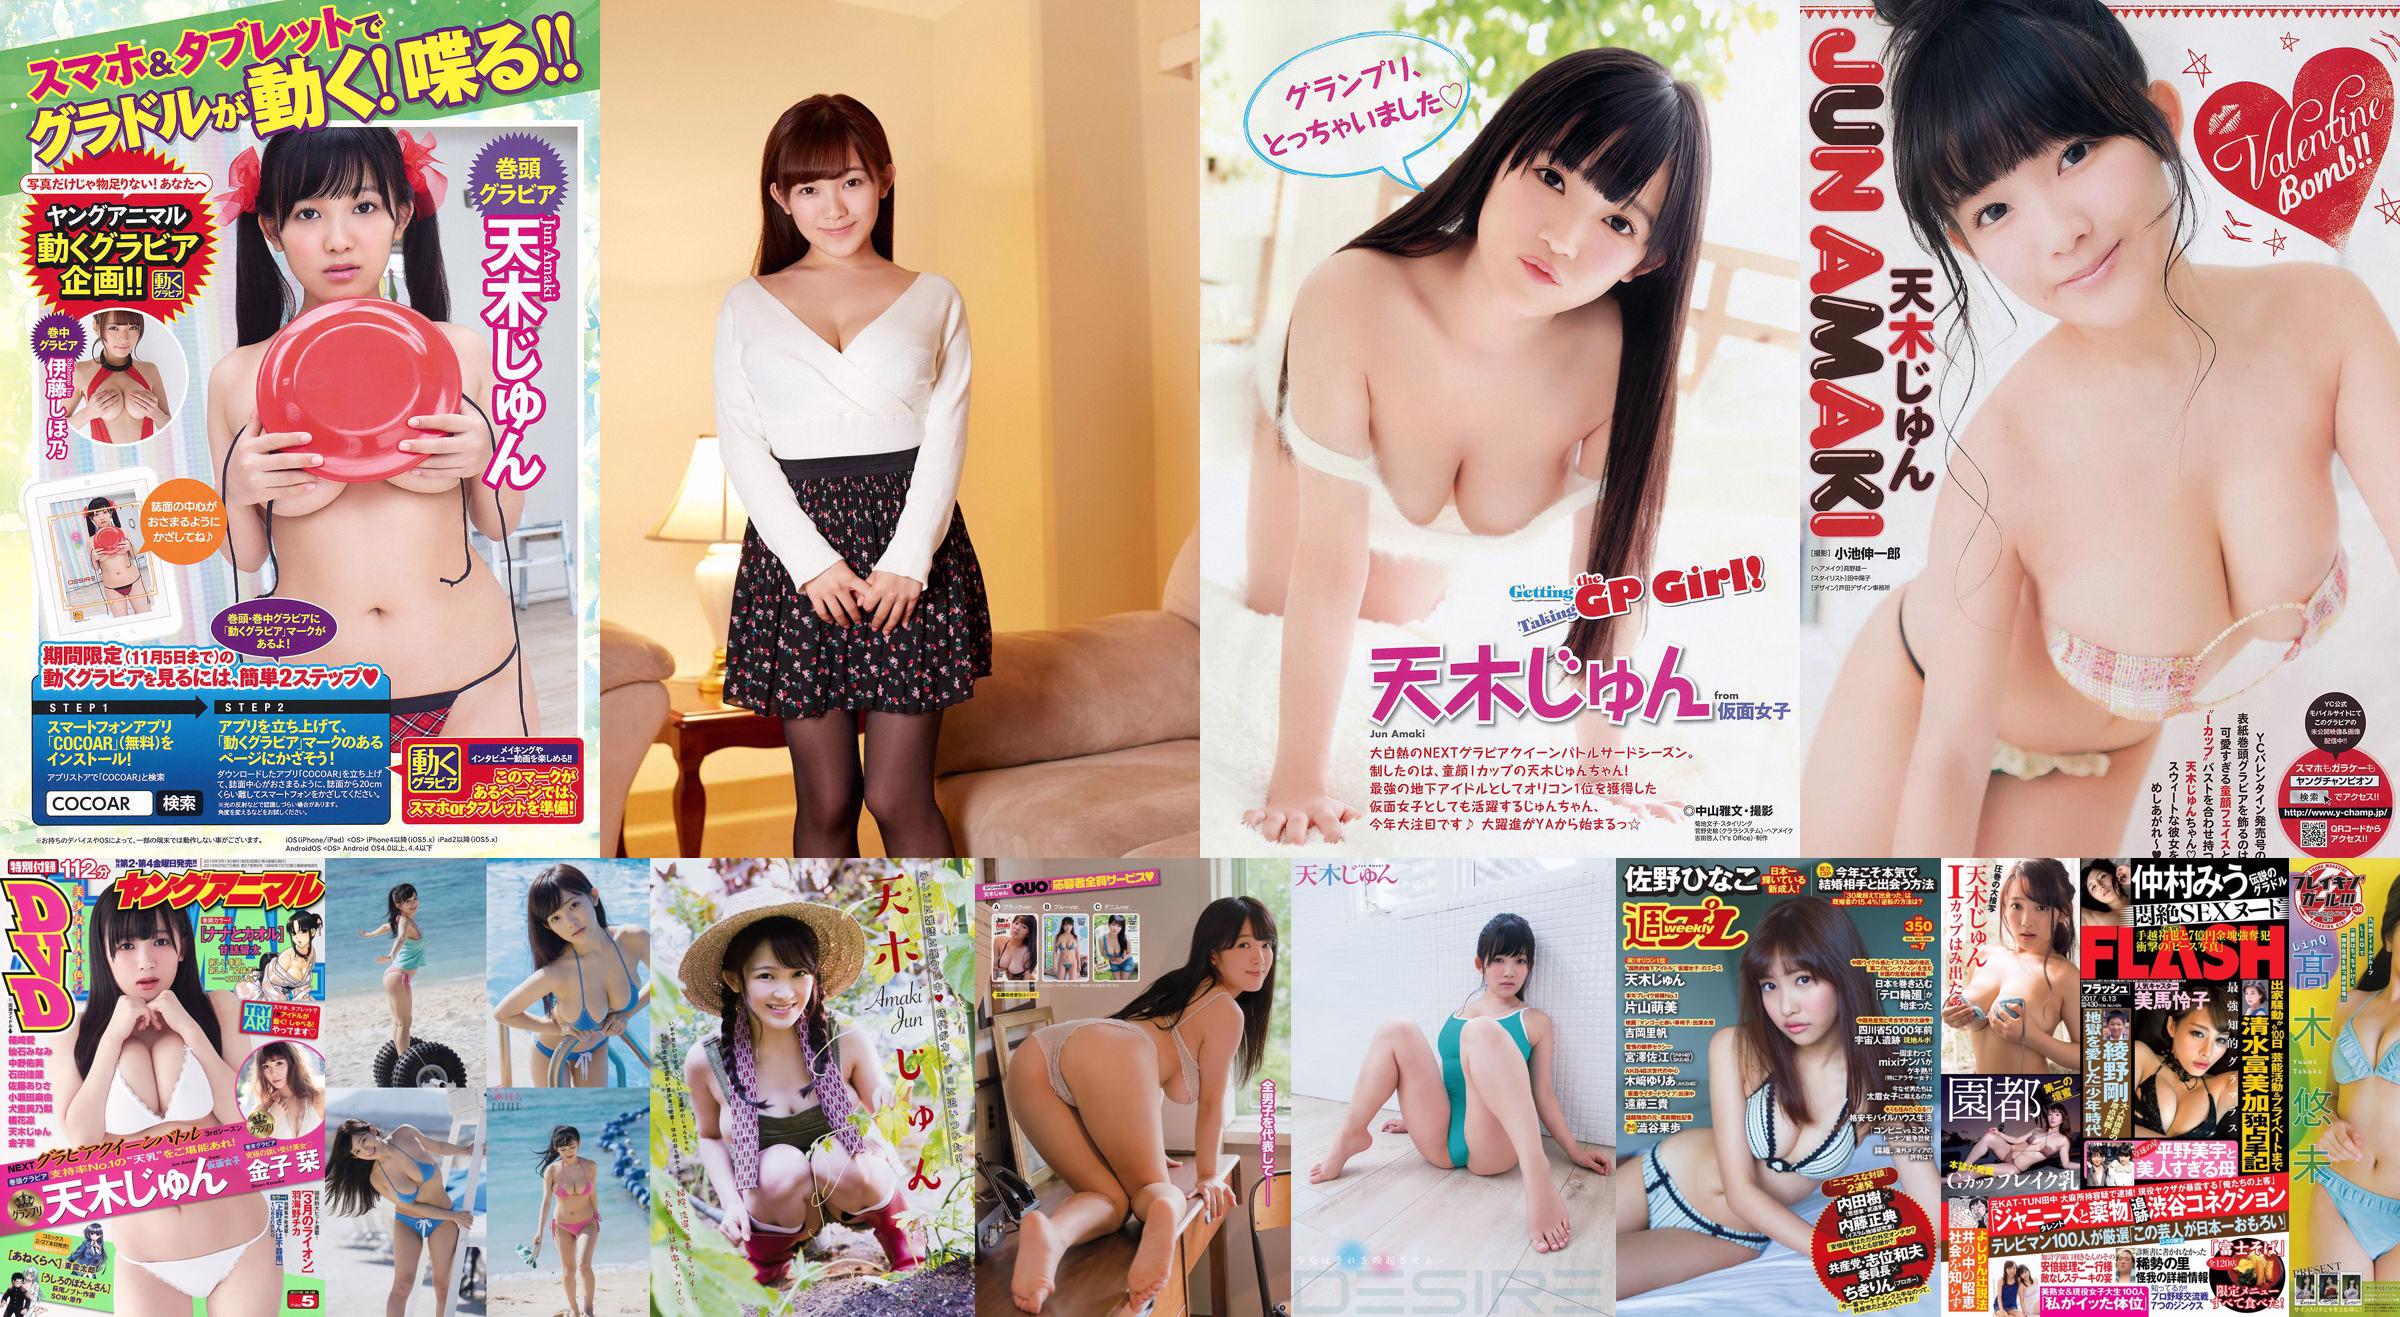 [FRIDAY] Jun Amaki "Like an anime with huge breasts cheerleader" Photo No.8b072e Page 7